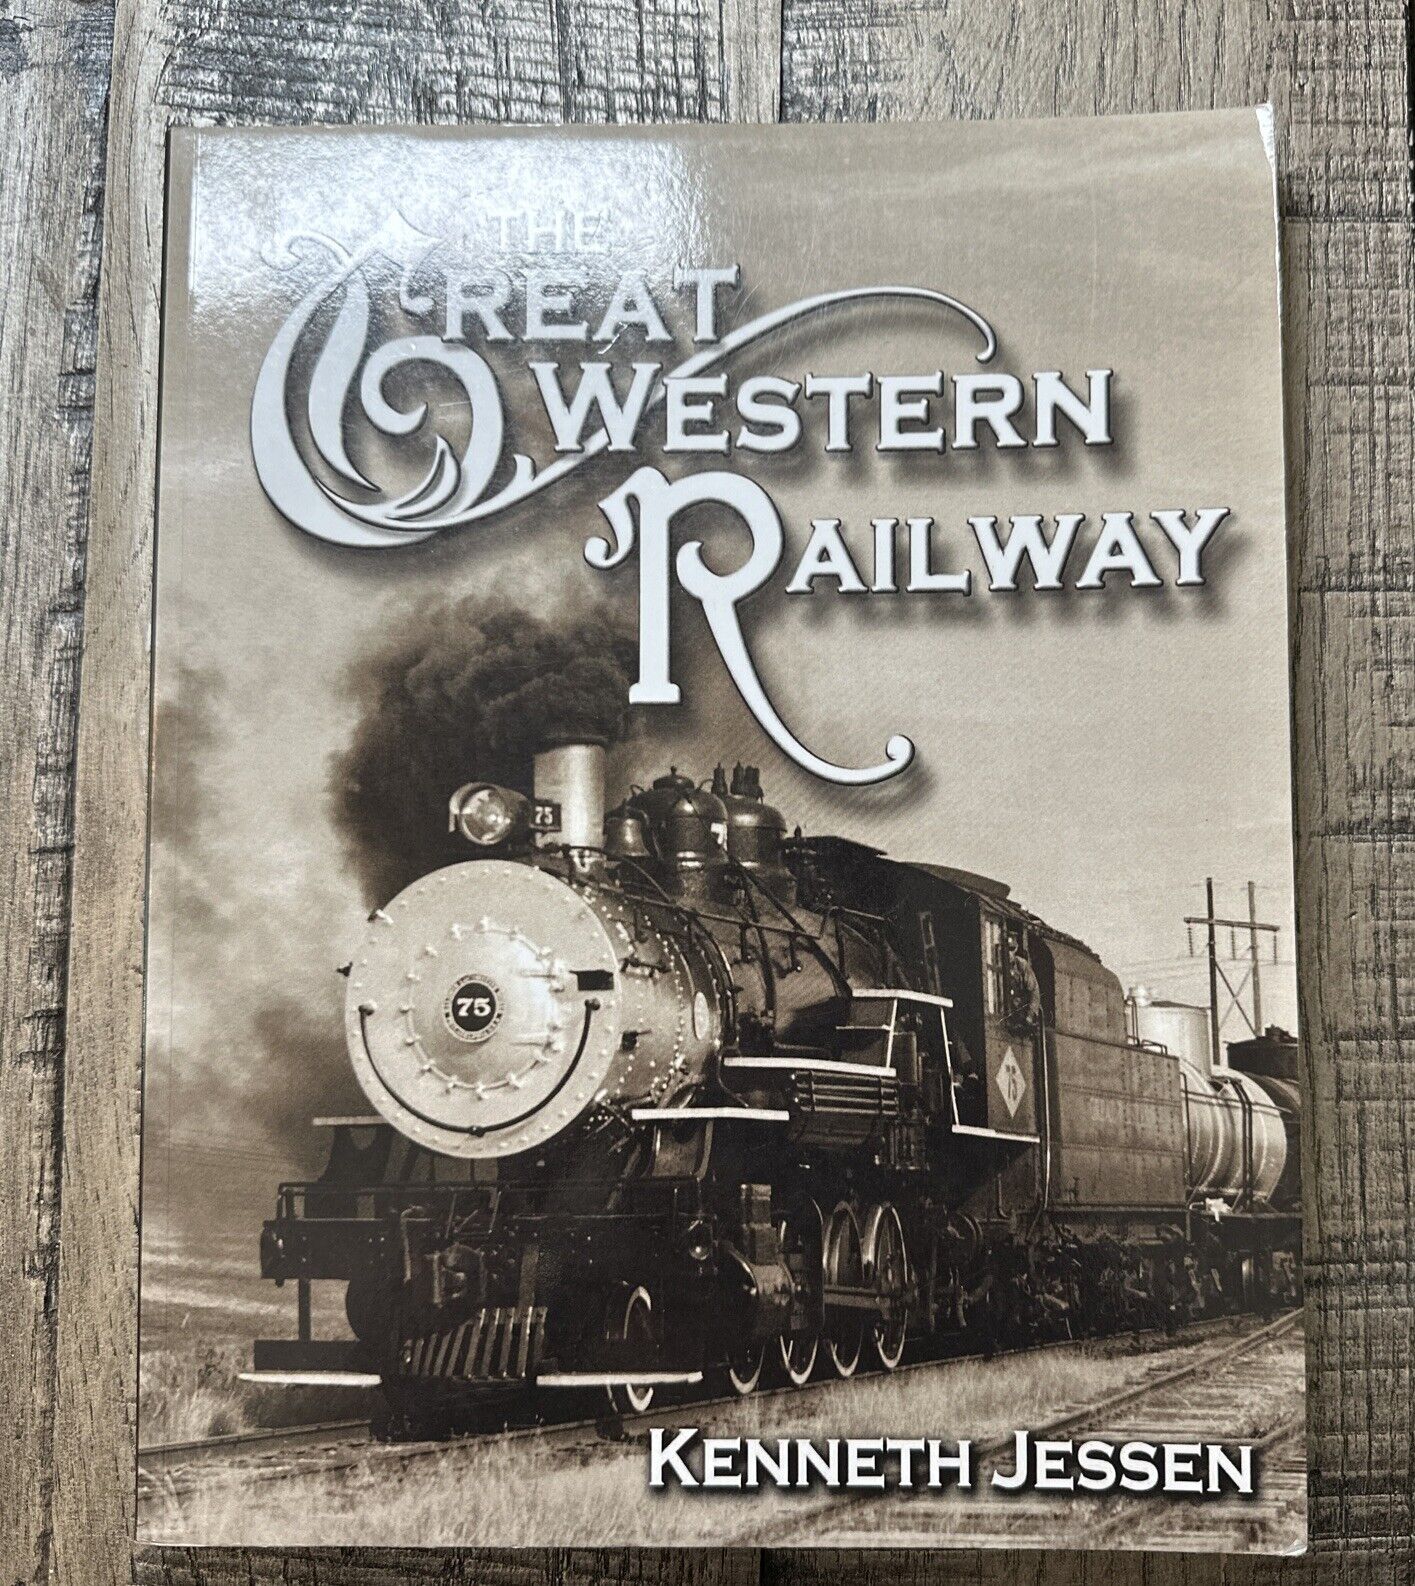 The Great Western Railway by Kenneth Jessen SC 2007